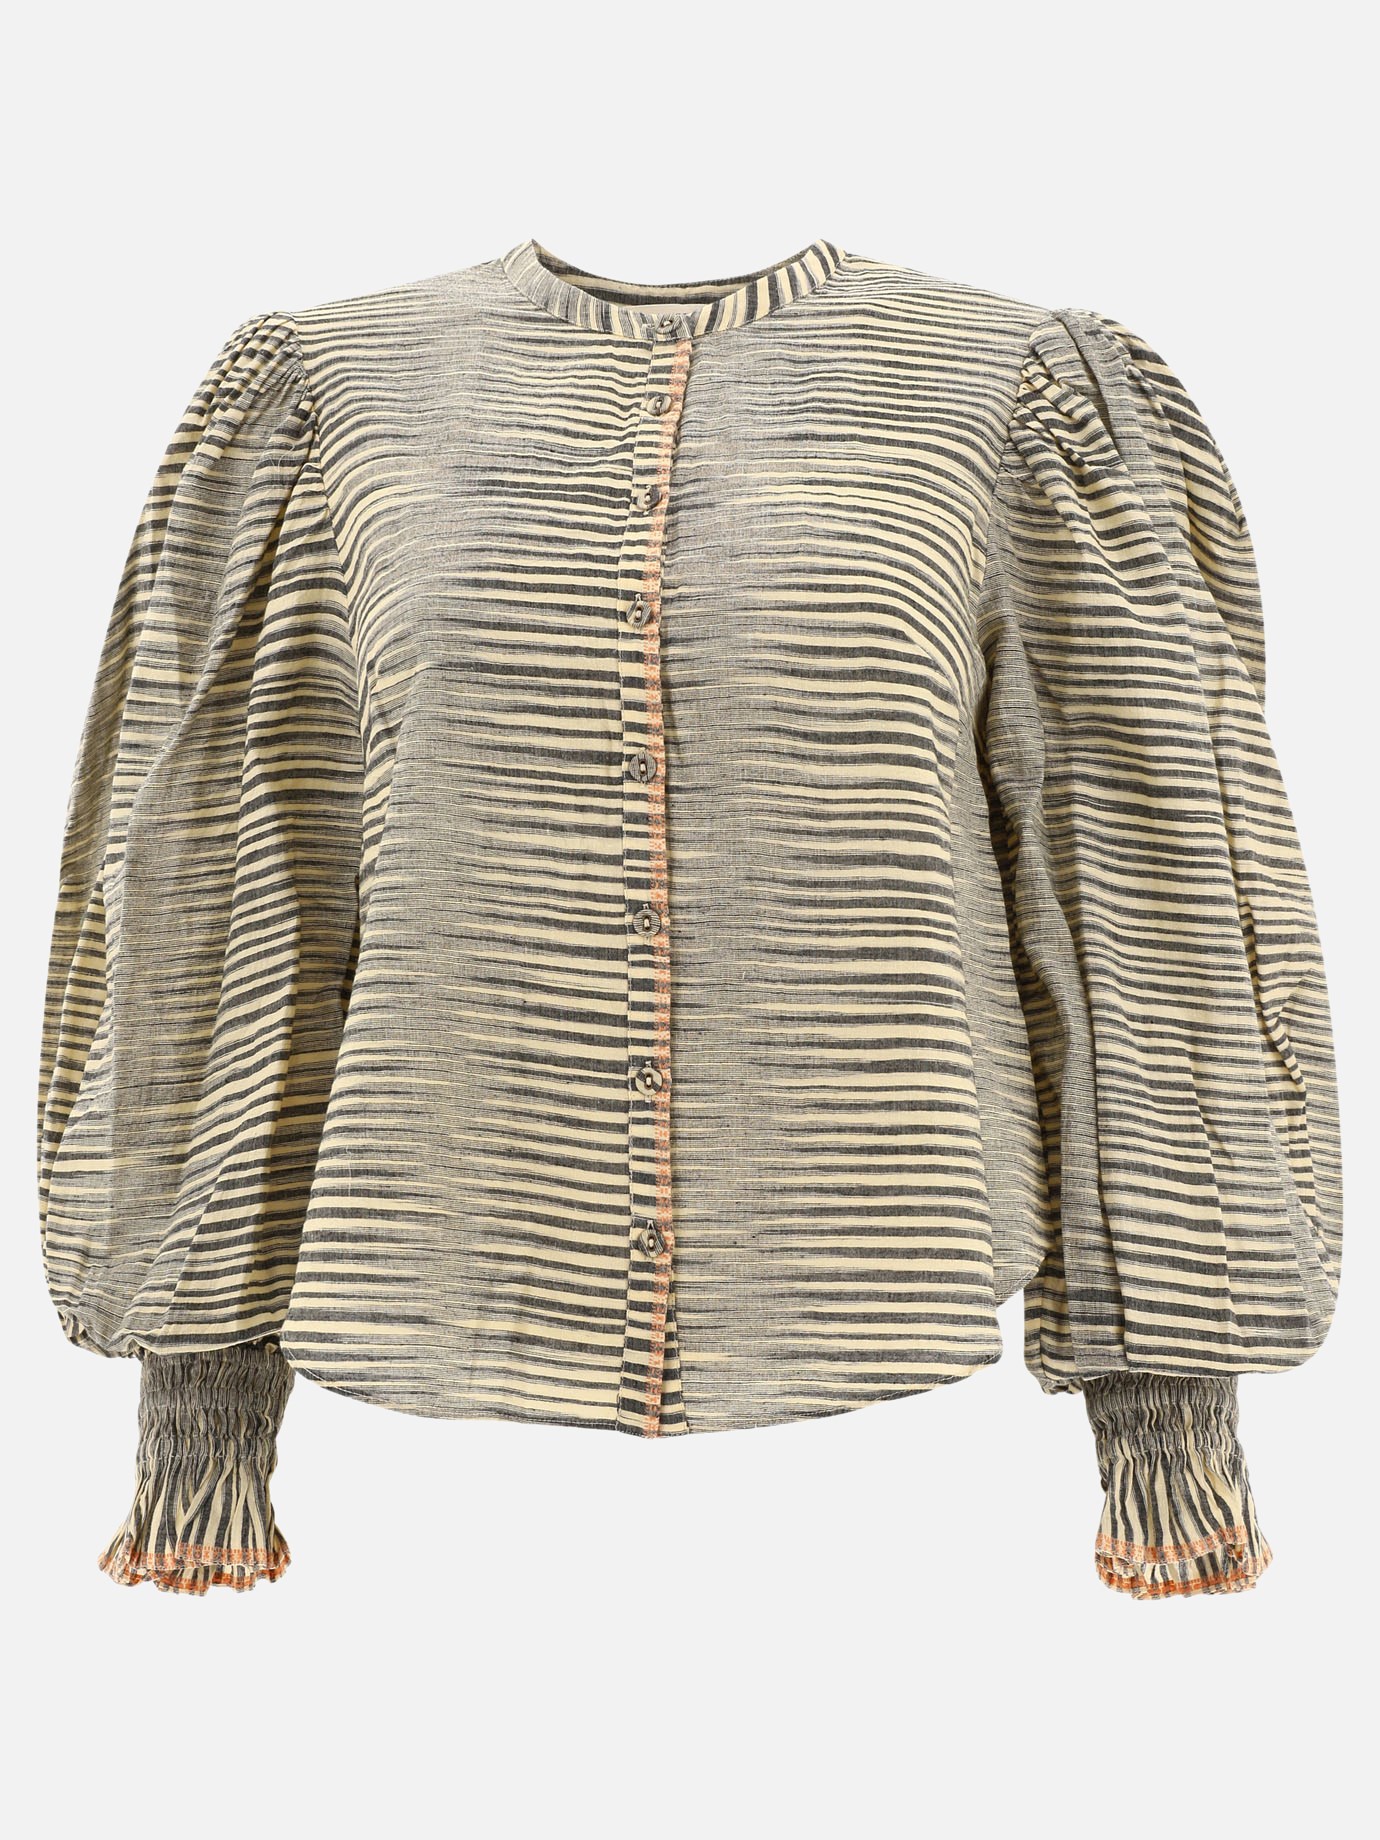  Finley  blouse by Ulla Johnson